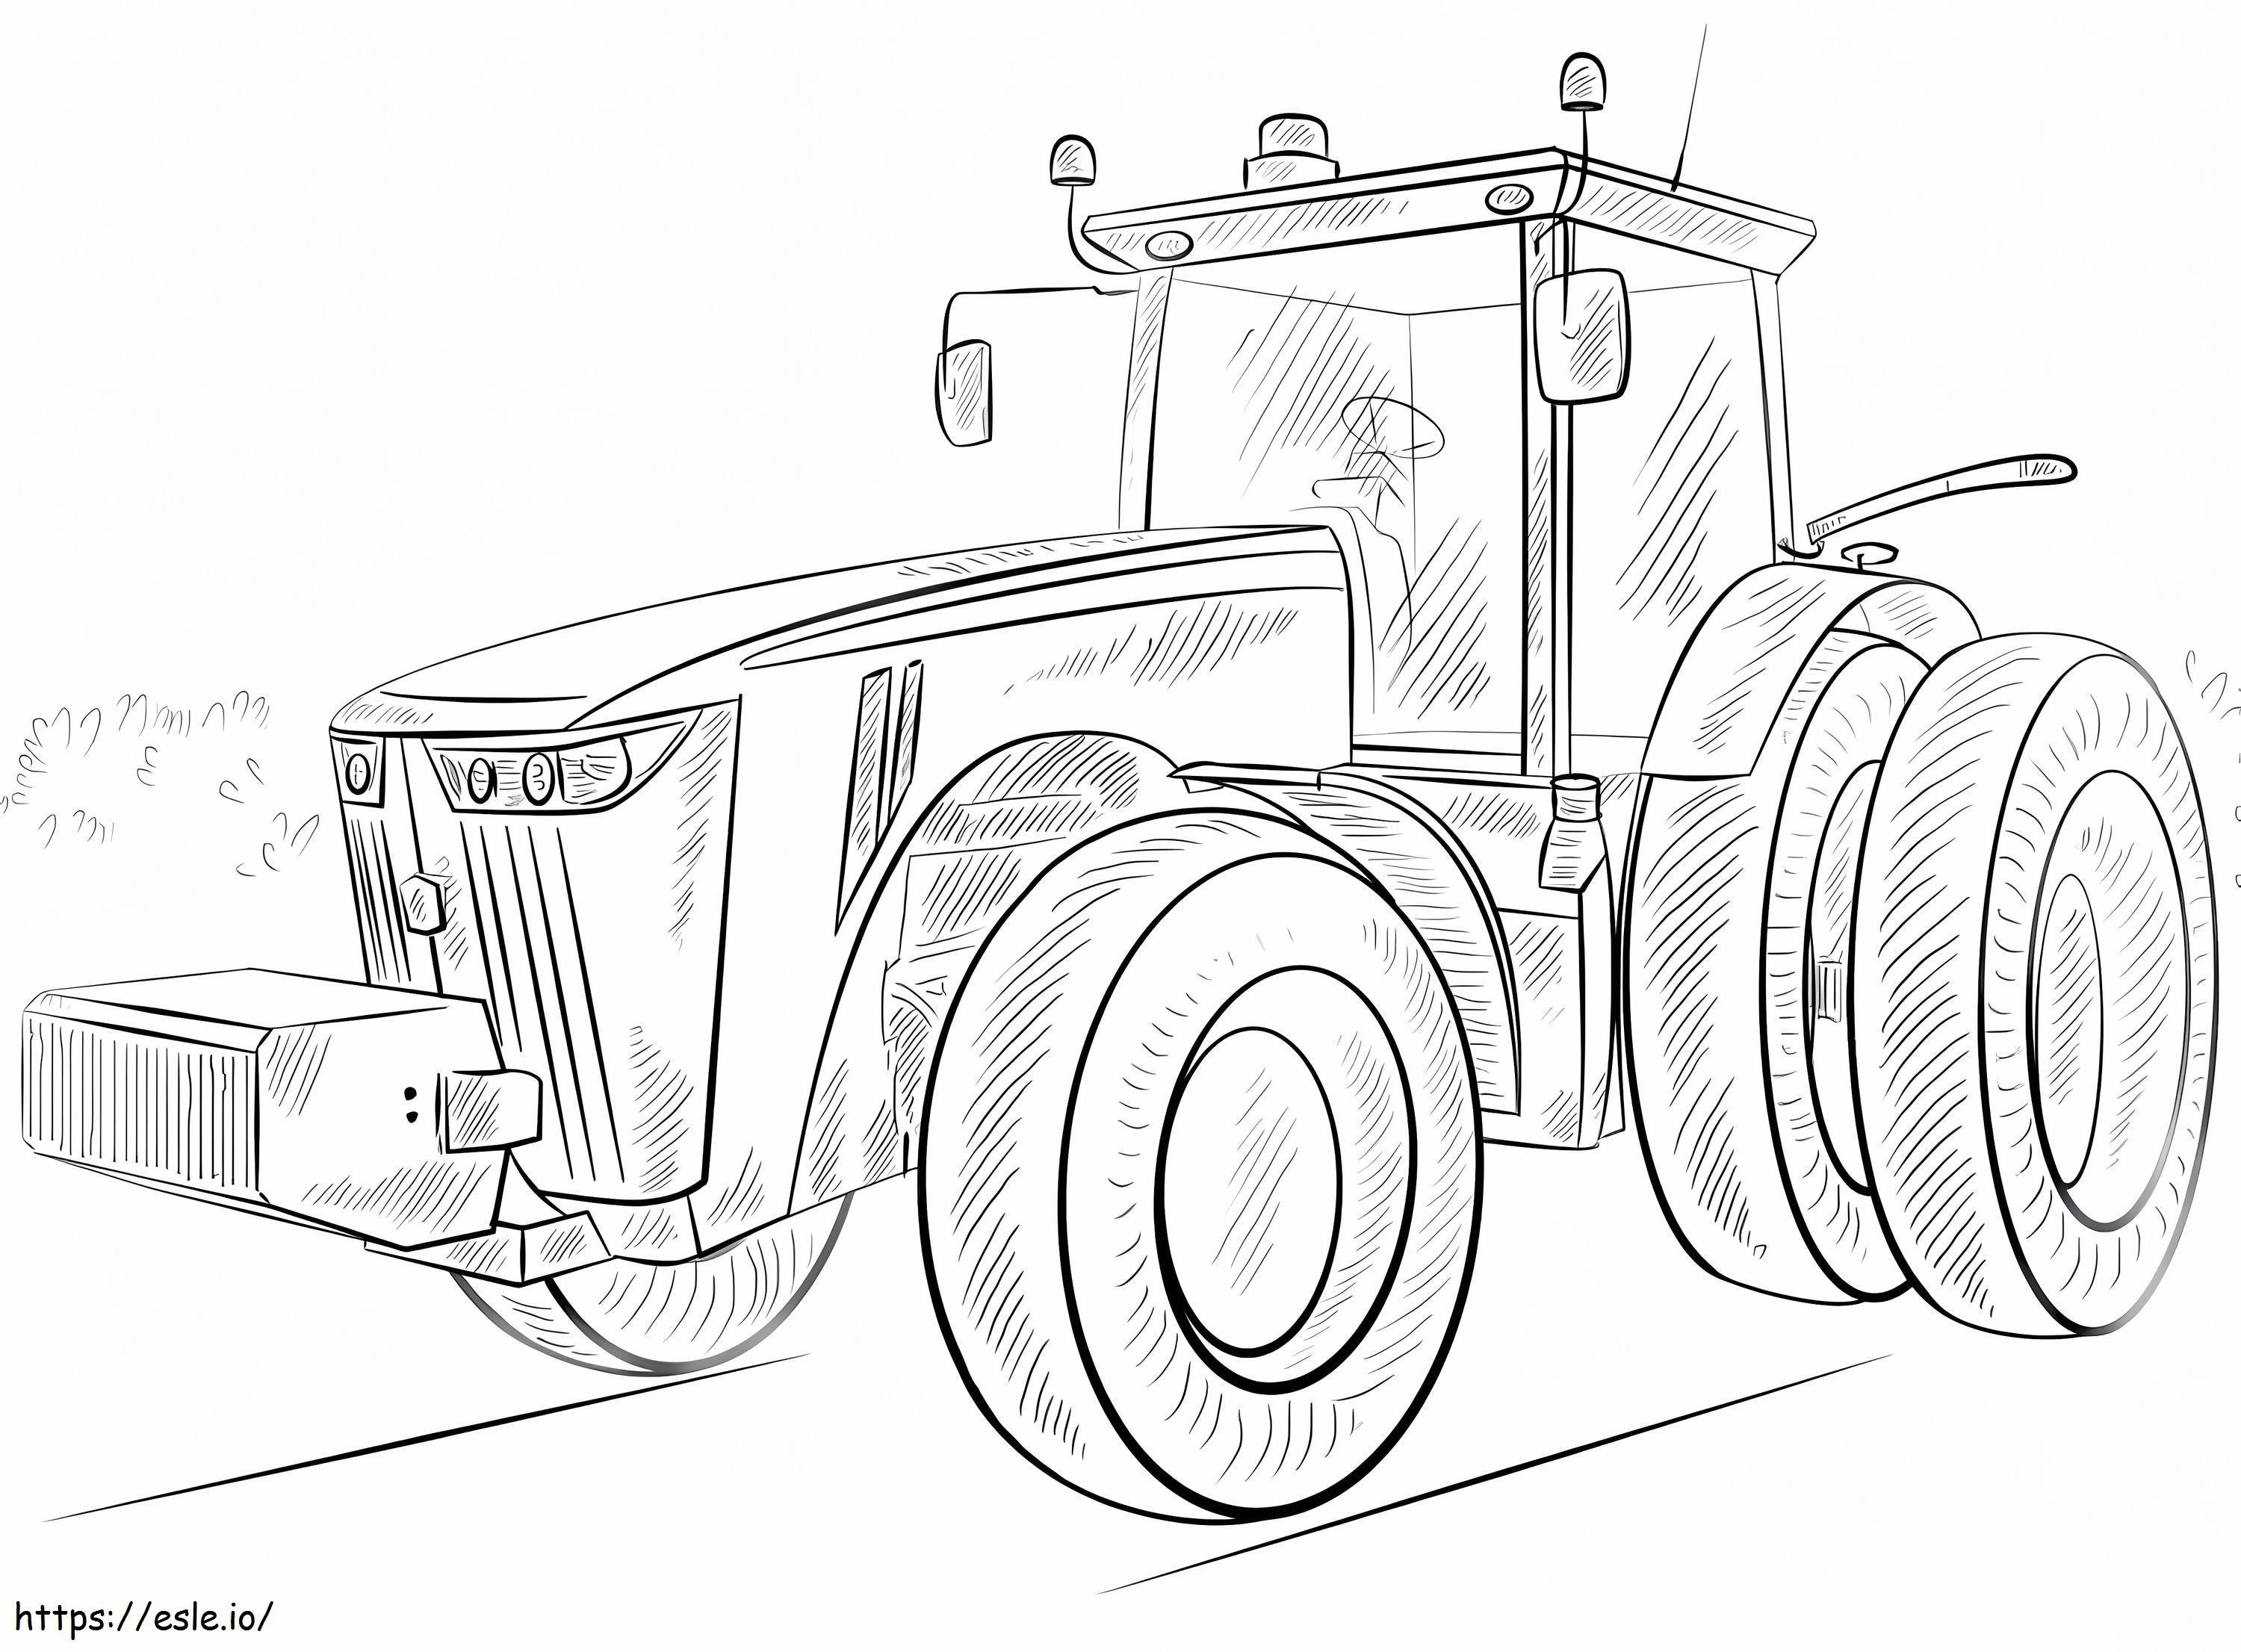 John Deere Tractor coloring page